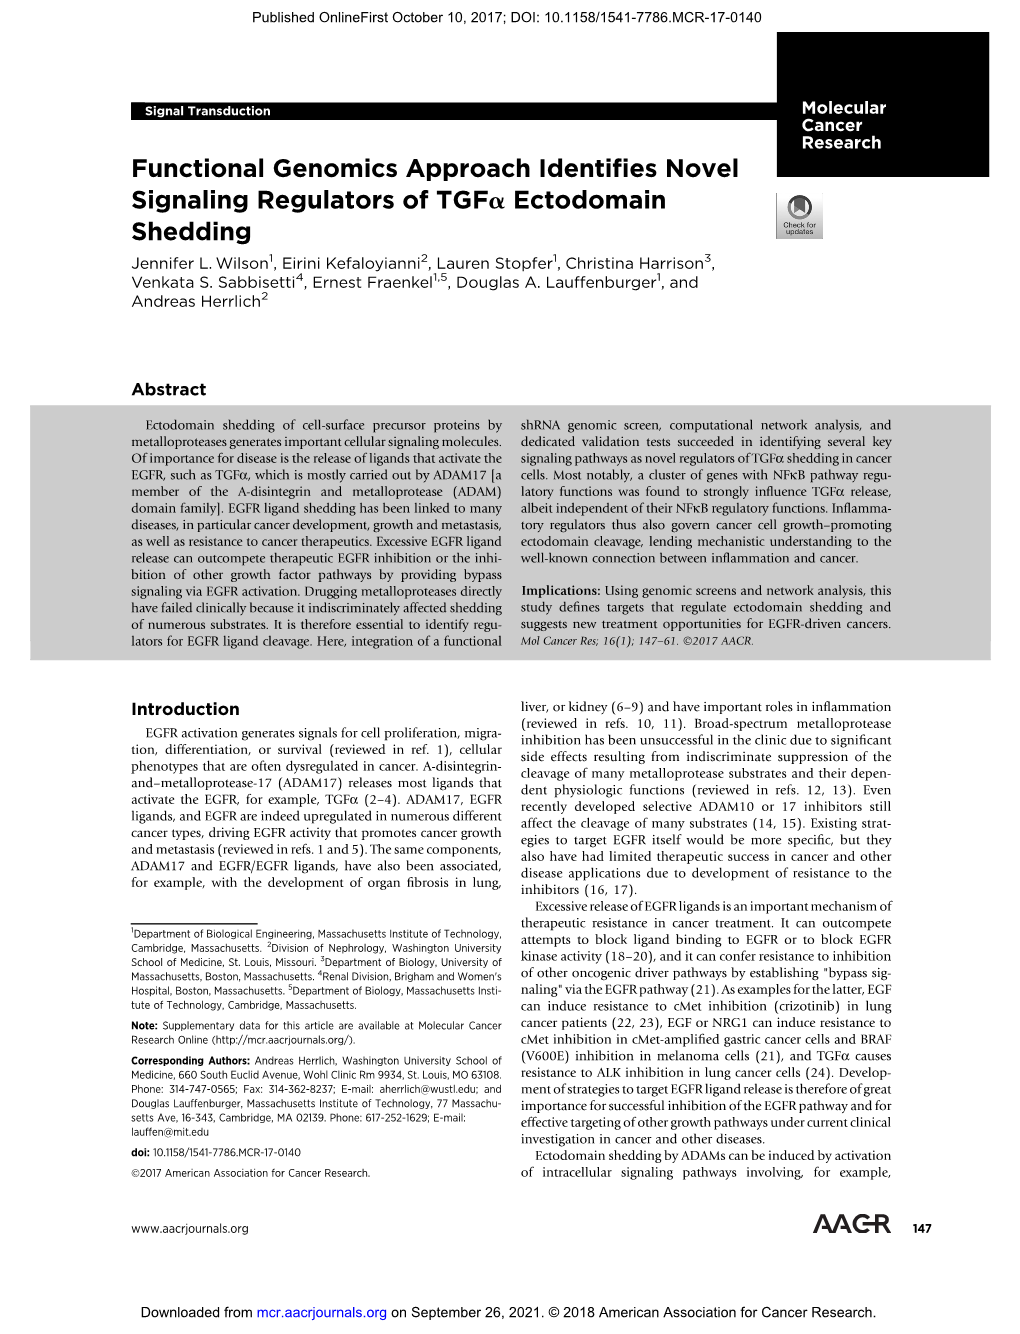 Functional Genomics Approach Identifies Novel Signaling Regulators of Tgfa Ectodomain Shedding